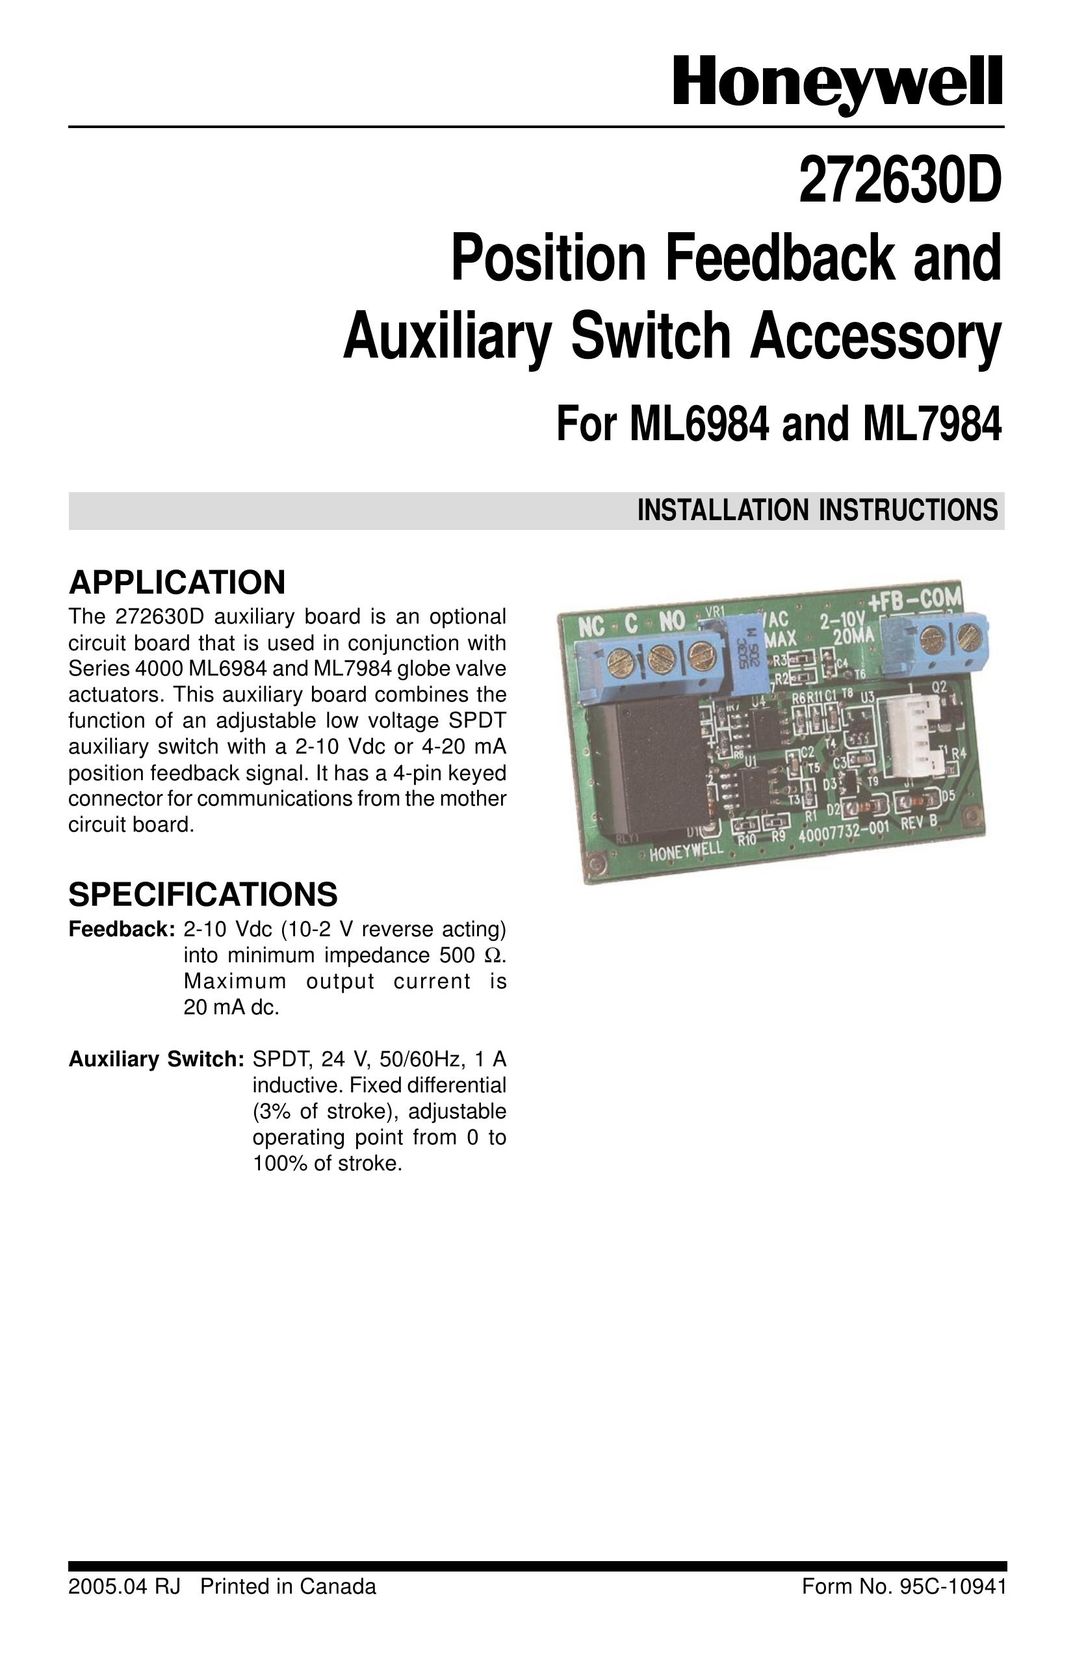 Honeywell 272630D Switch User Manual